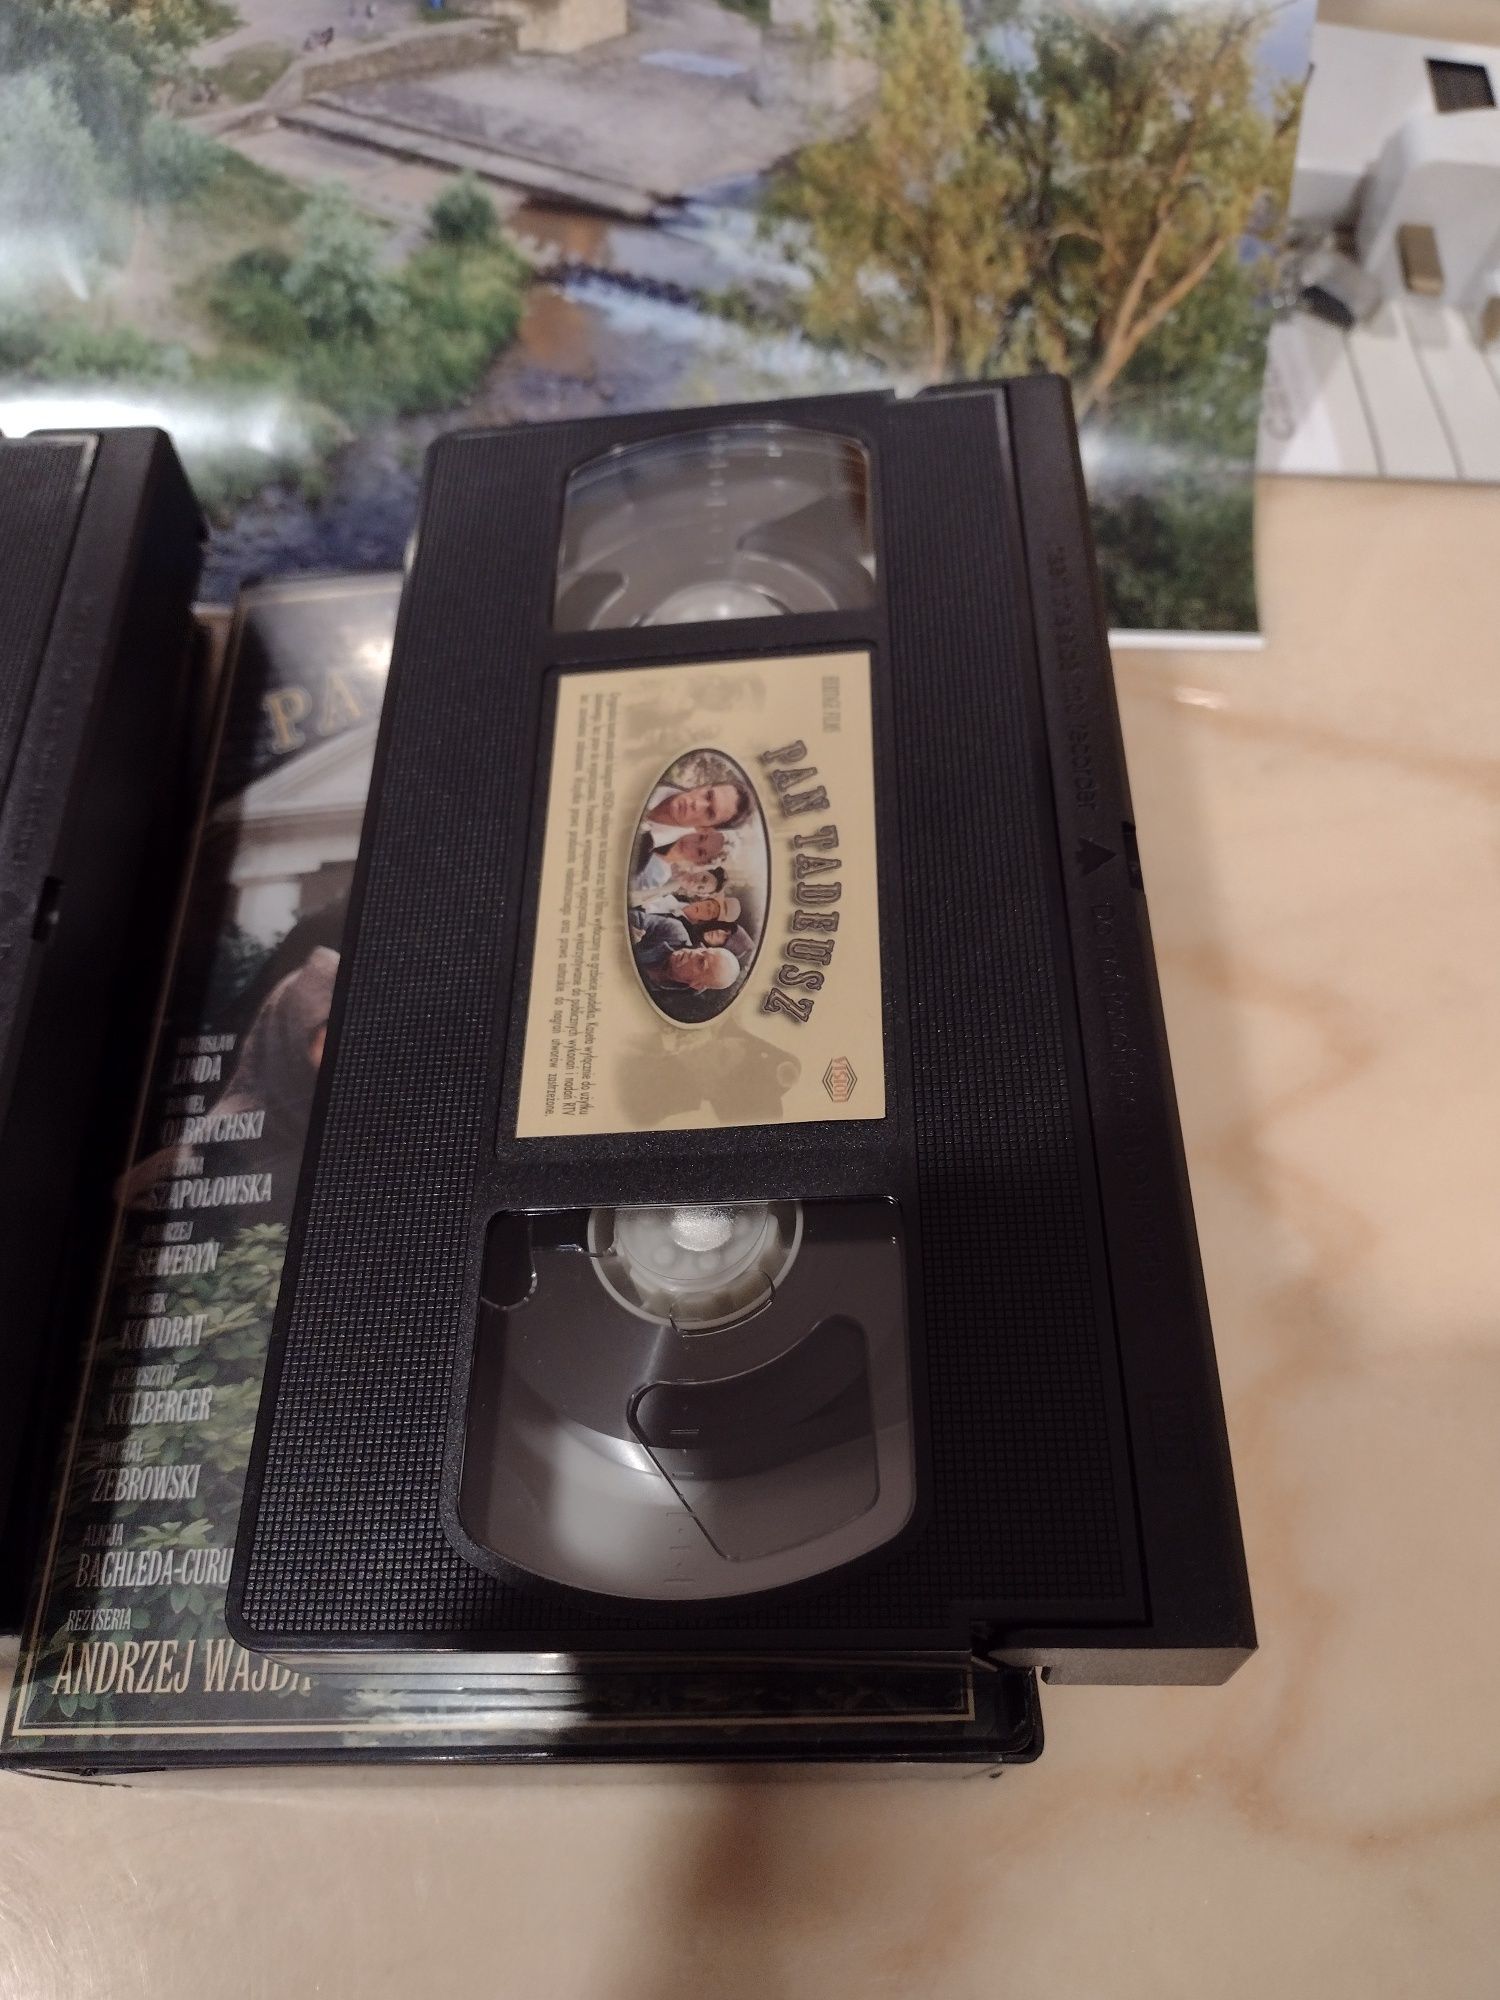 Dwie kasety VHS. Zemsta i P.Tadeusz